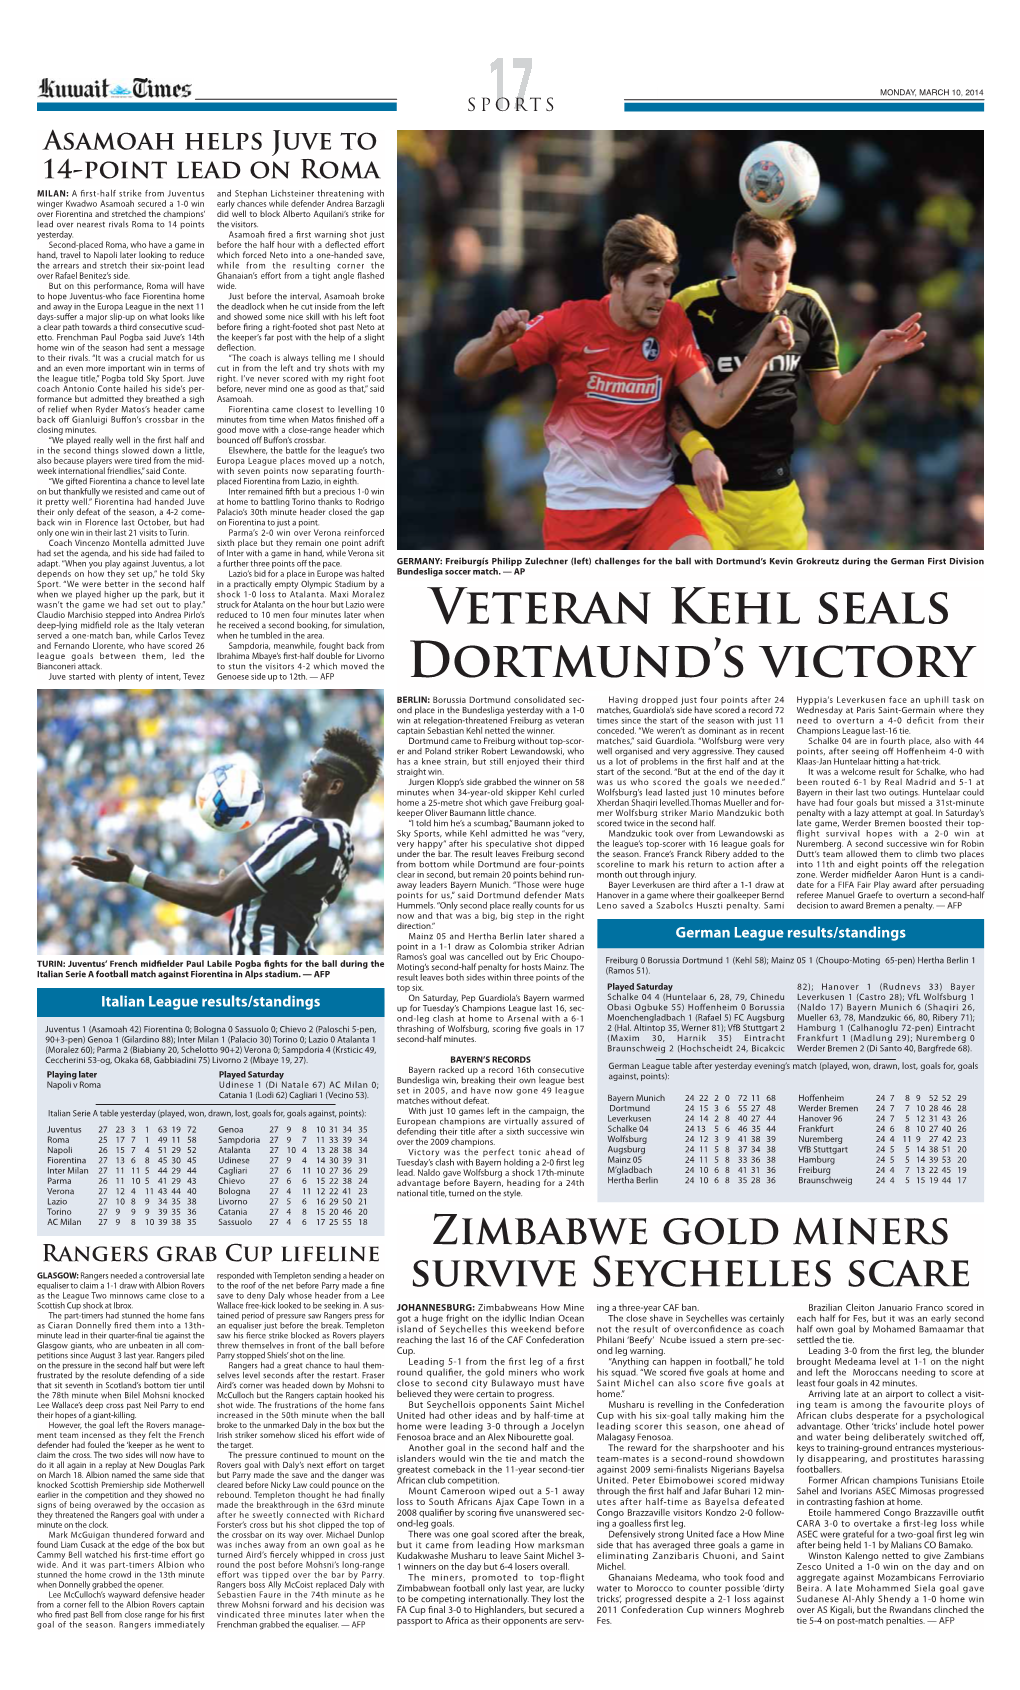 Veteran Kehl Seals Dortmund's Victory